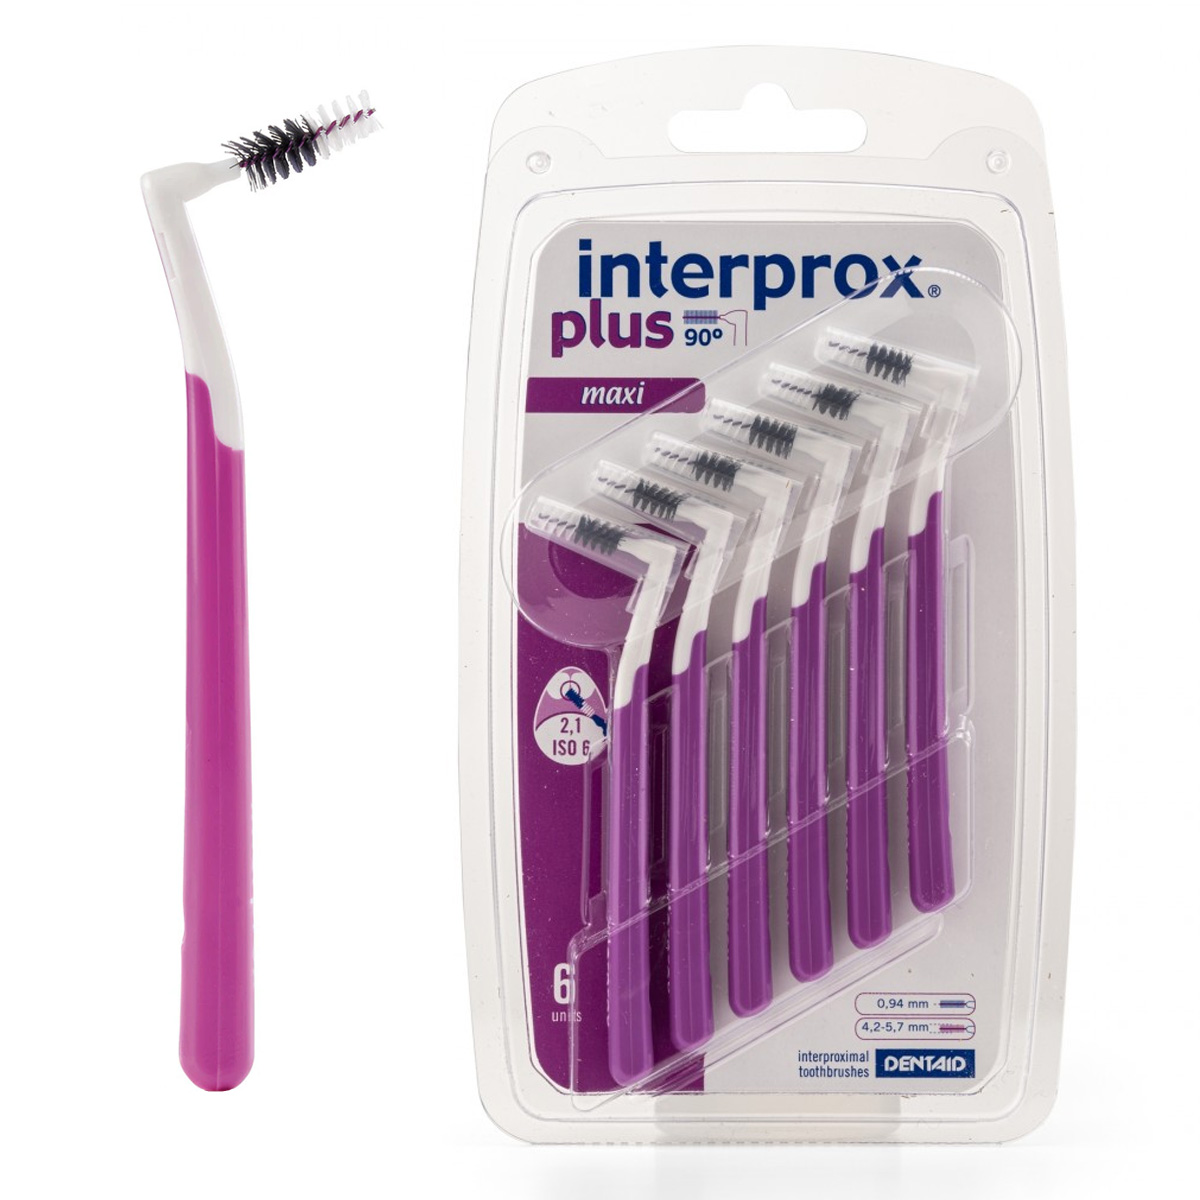 Межзубный ершик Interprox Interprox Plus Maxi 2.1 мм межзубный ершик interprox plus maxi 6 шт